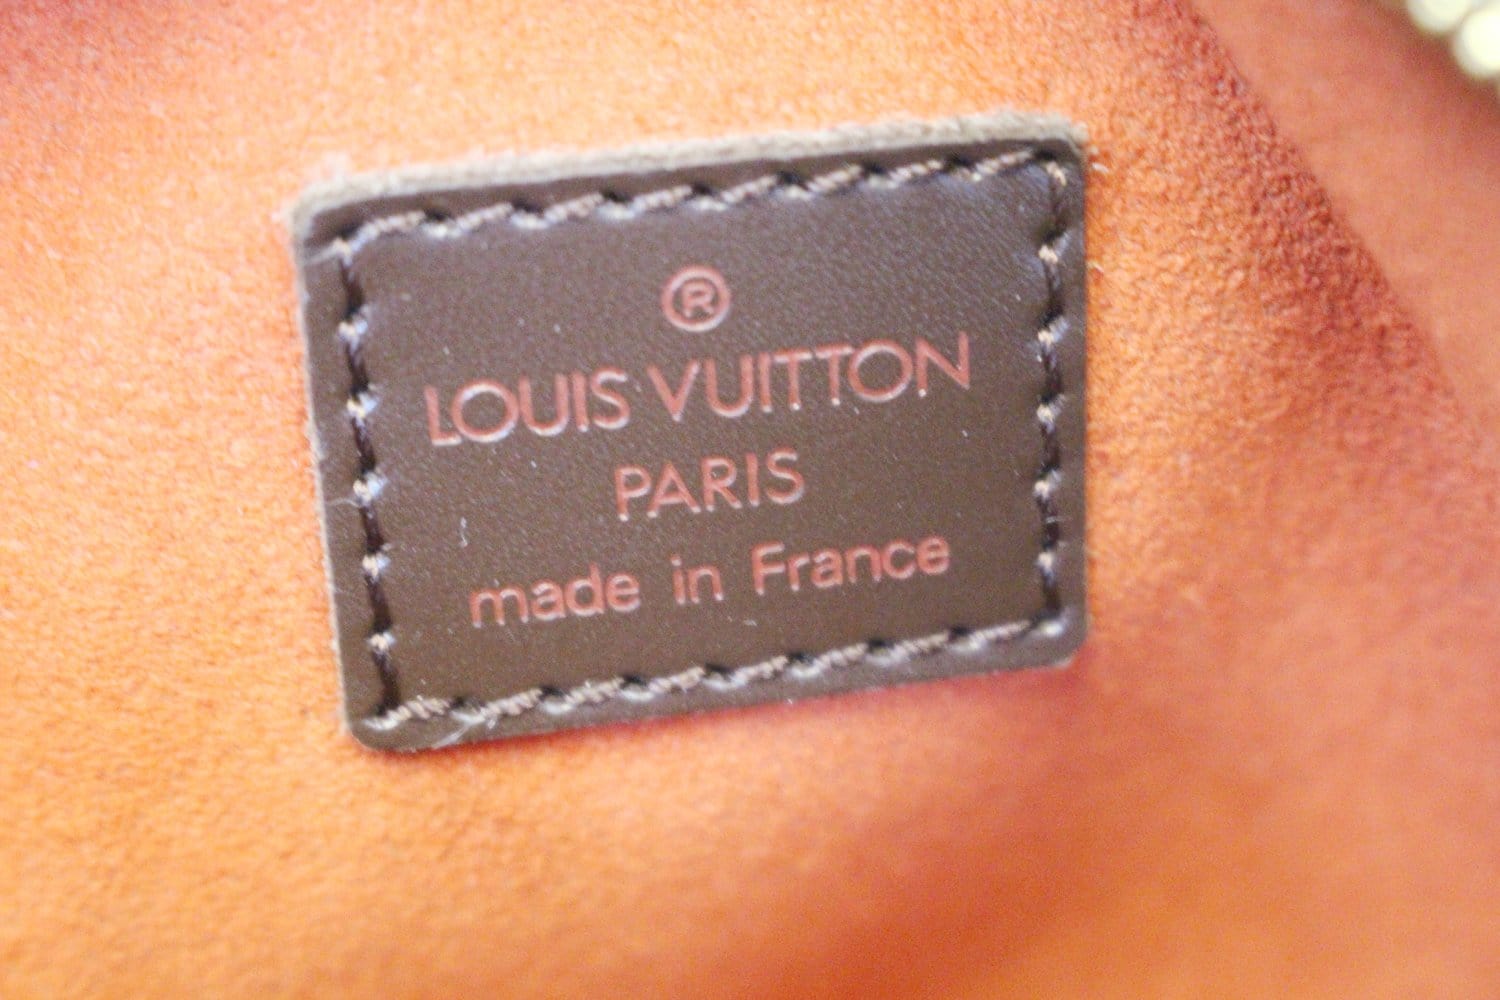  Shopbop Archive - Bolsa Louis Vuitton Ipanema para